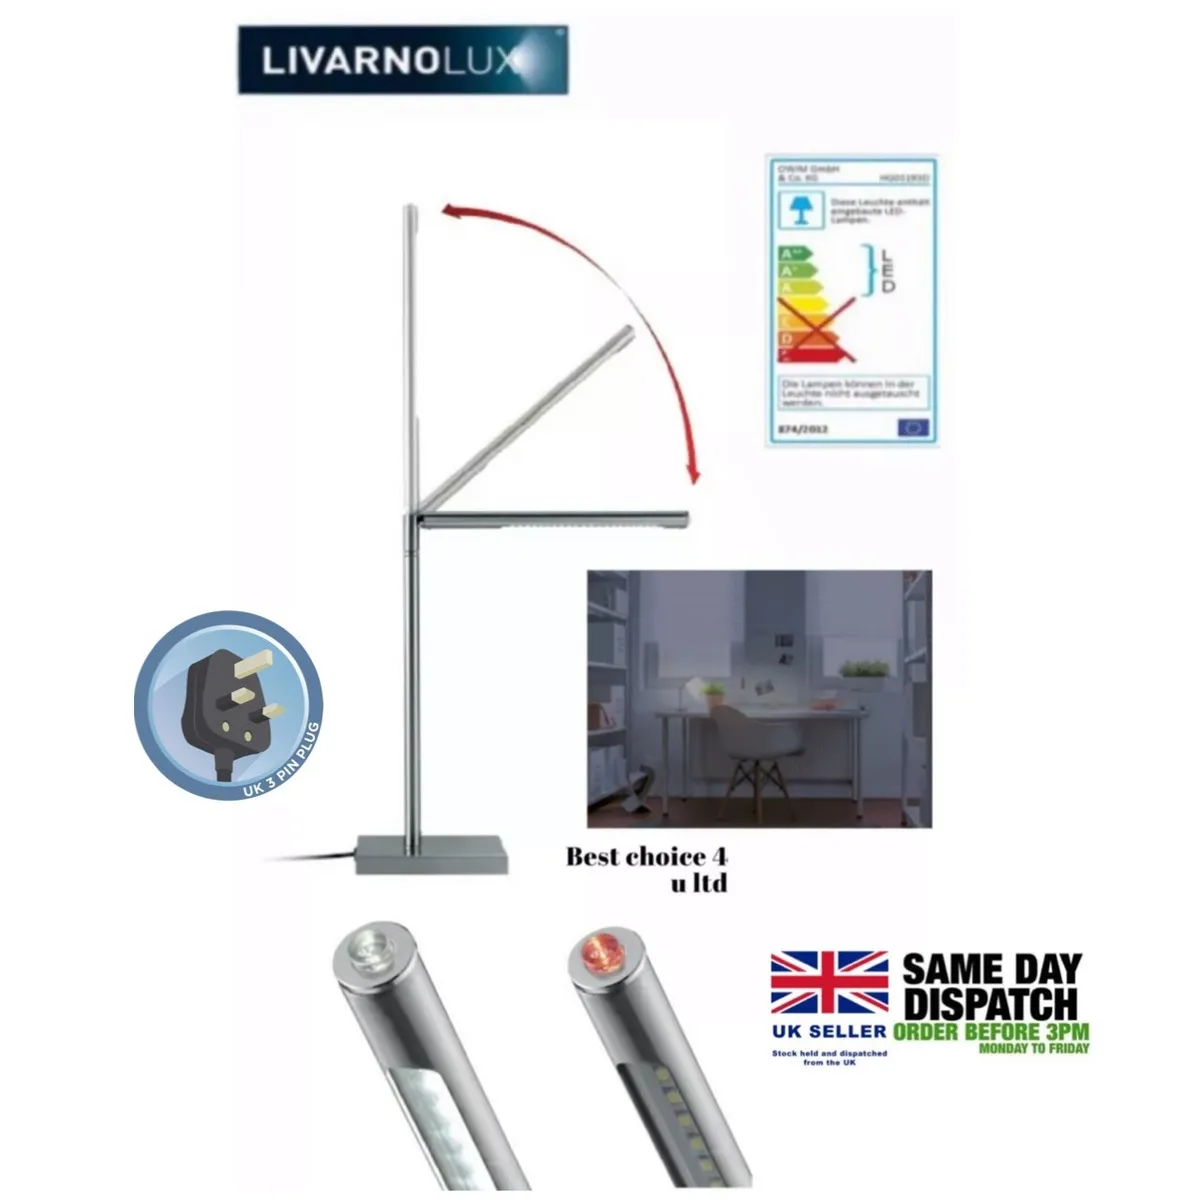 Livarnolux LED Strip Desk Lamp, Uses up To 83% Less Energy